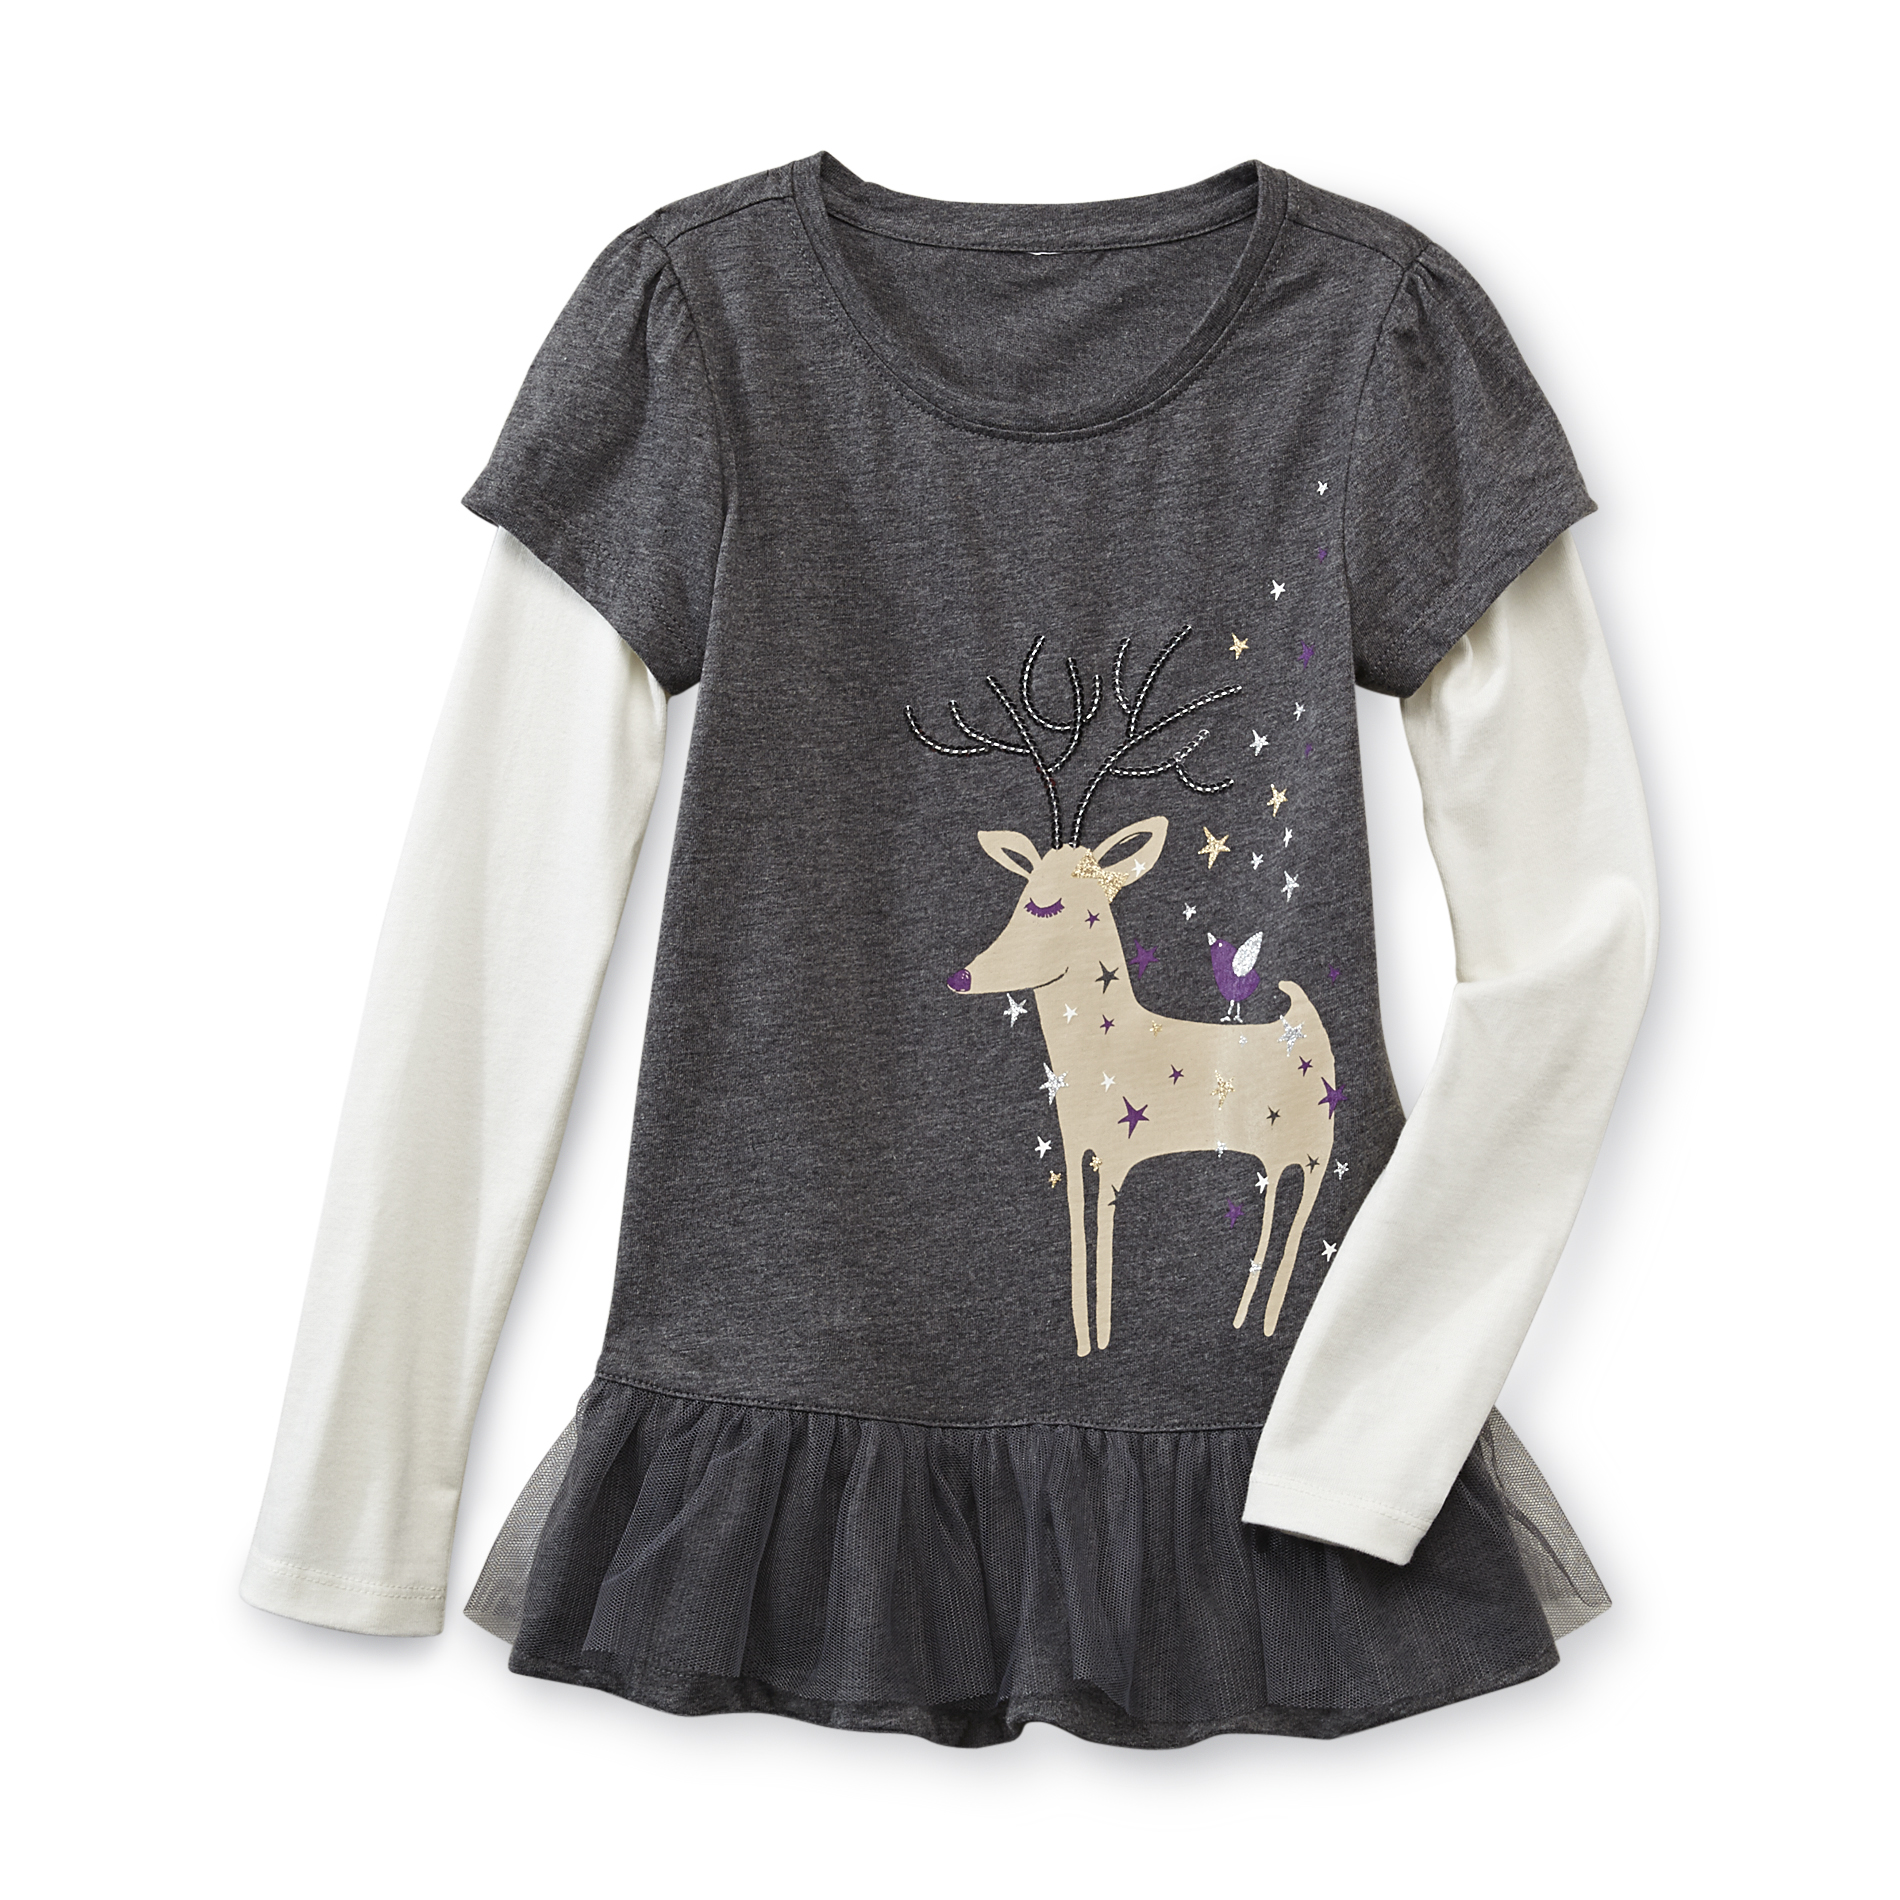 Toughskins Girl's Graphic Tunic Top - Deer & Bird